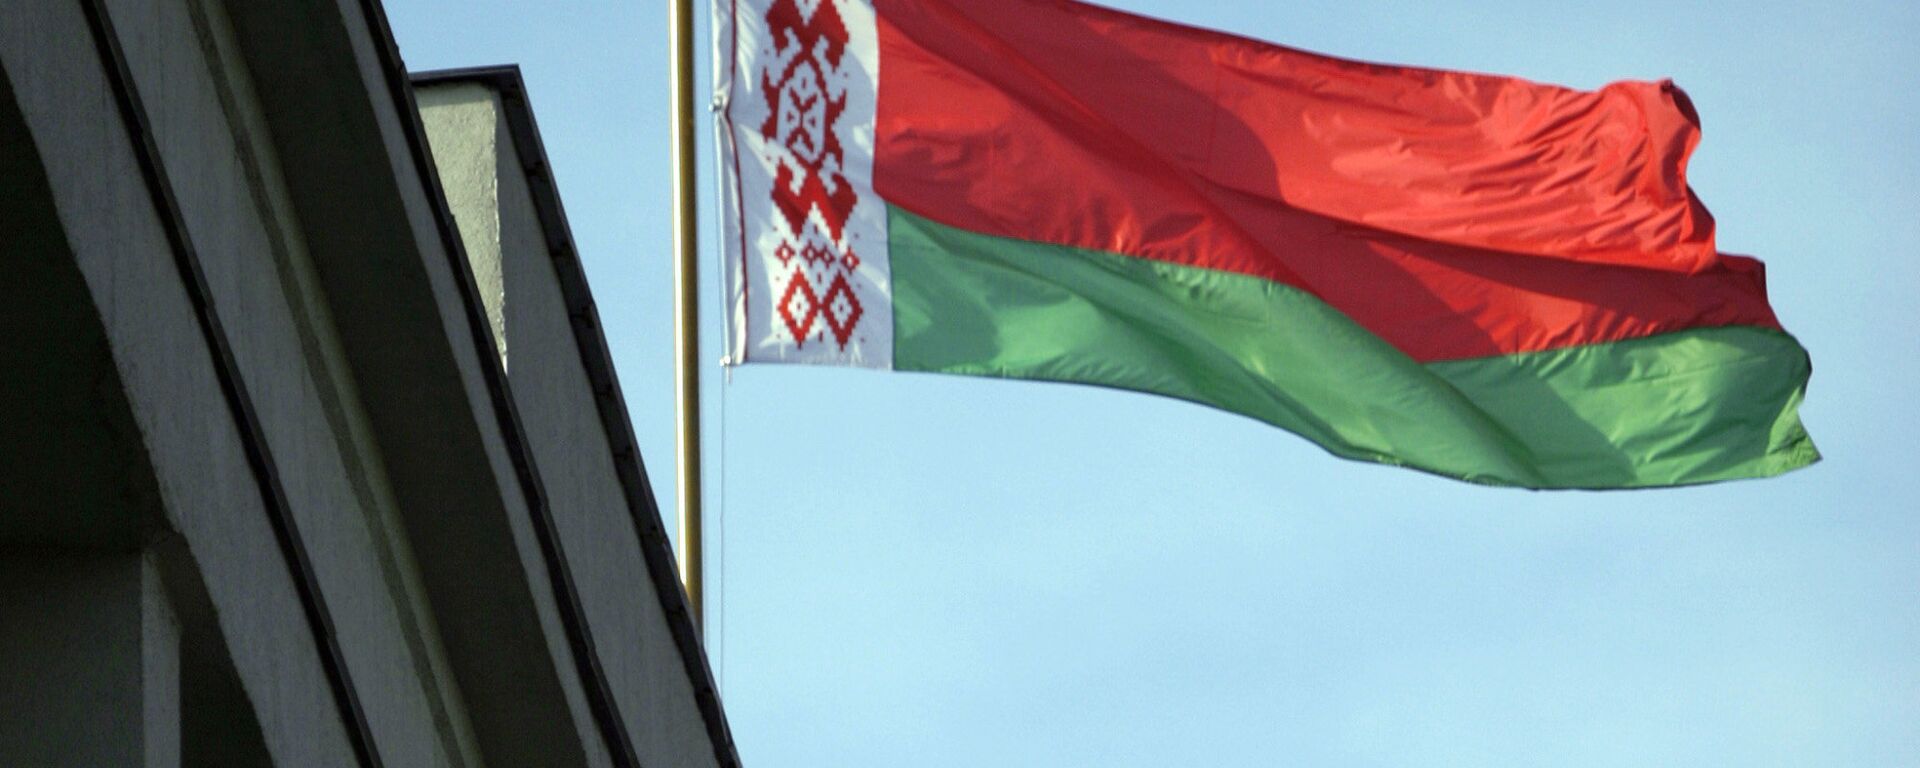 Bandera de Bielorrusia - Sputnik Mundo, 1920, 06.12.2021